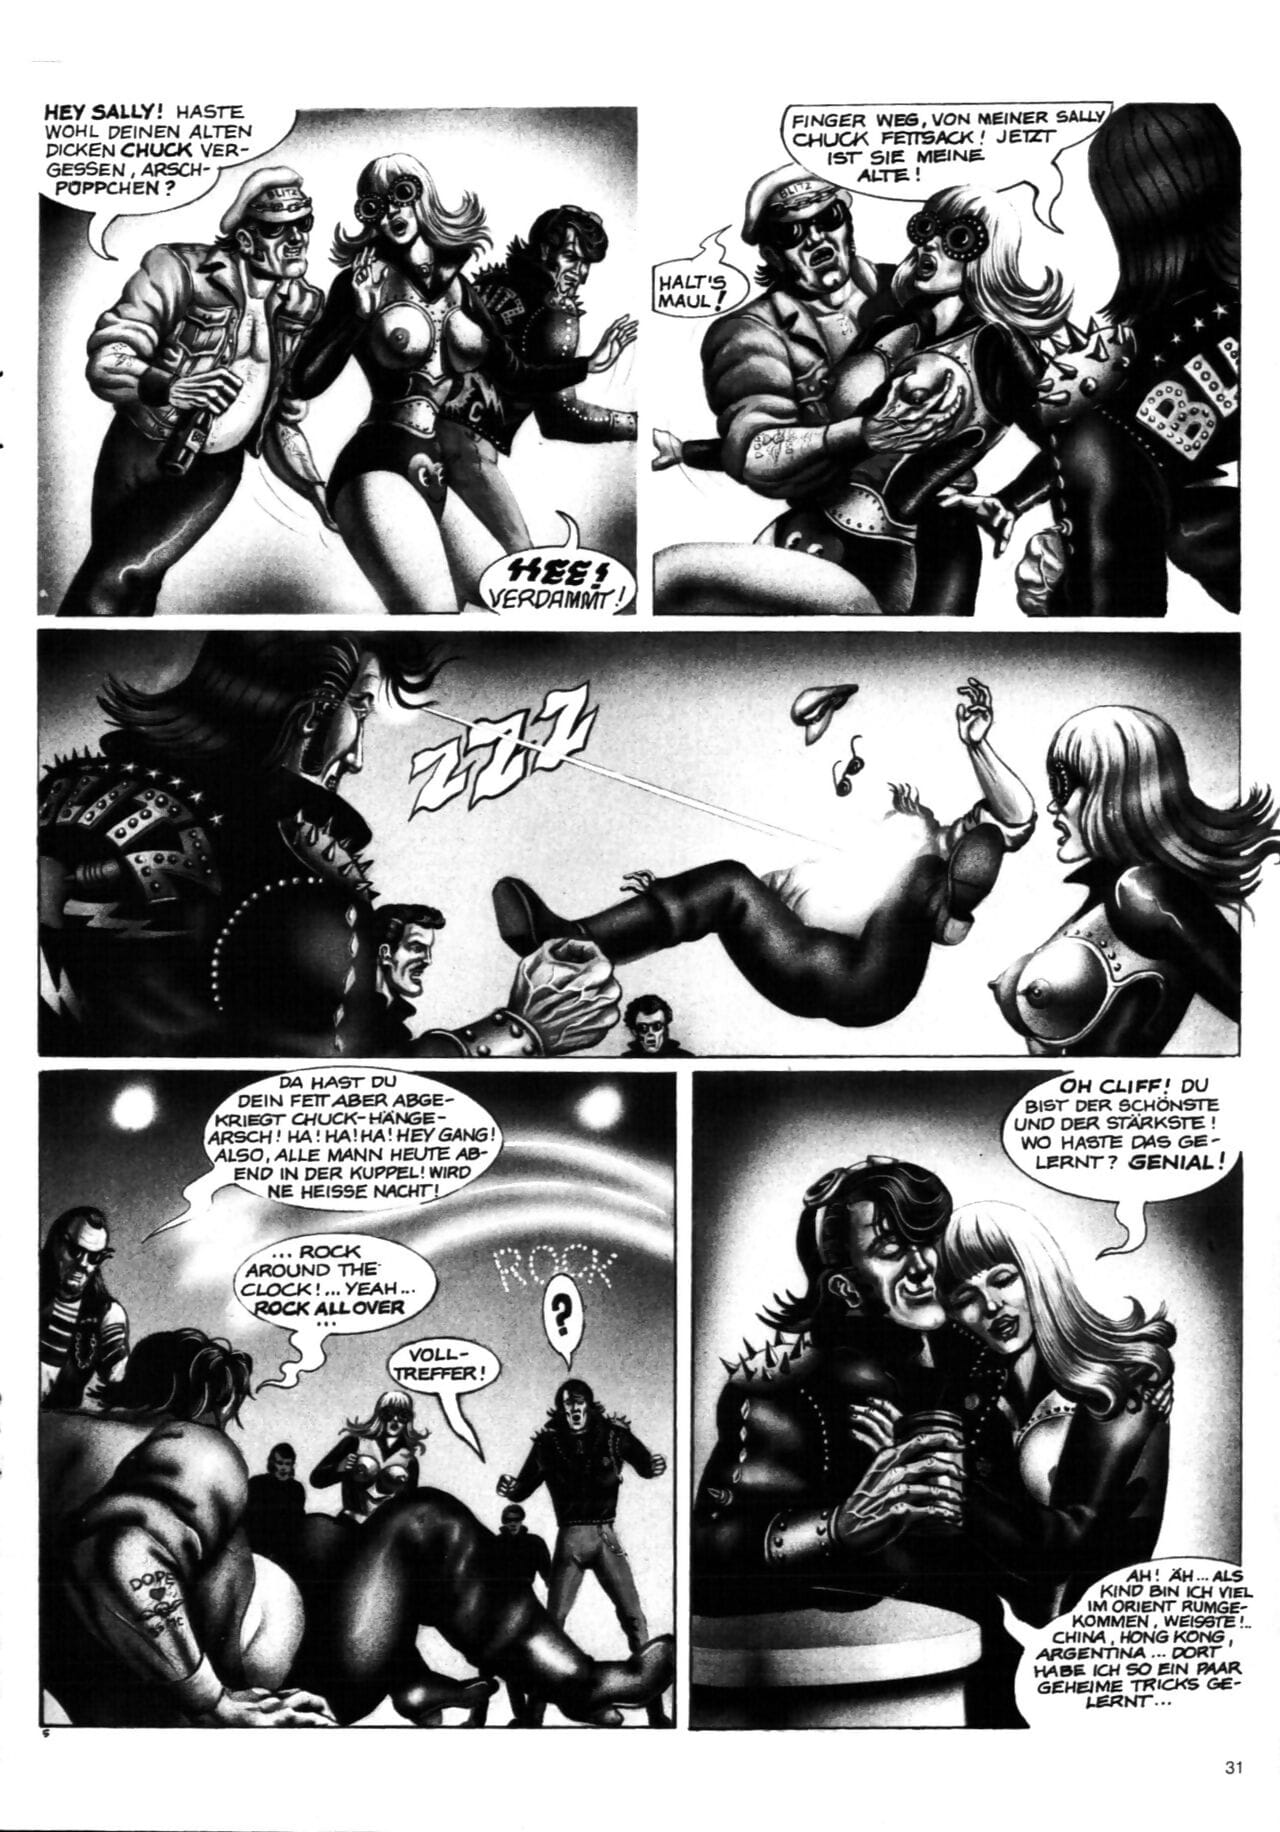 schwermetall #010 Teil 2 page 1